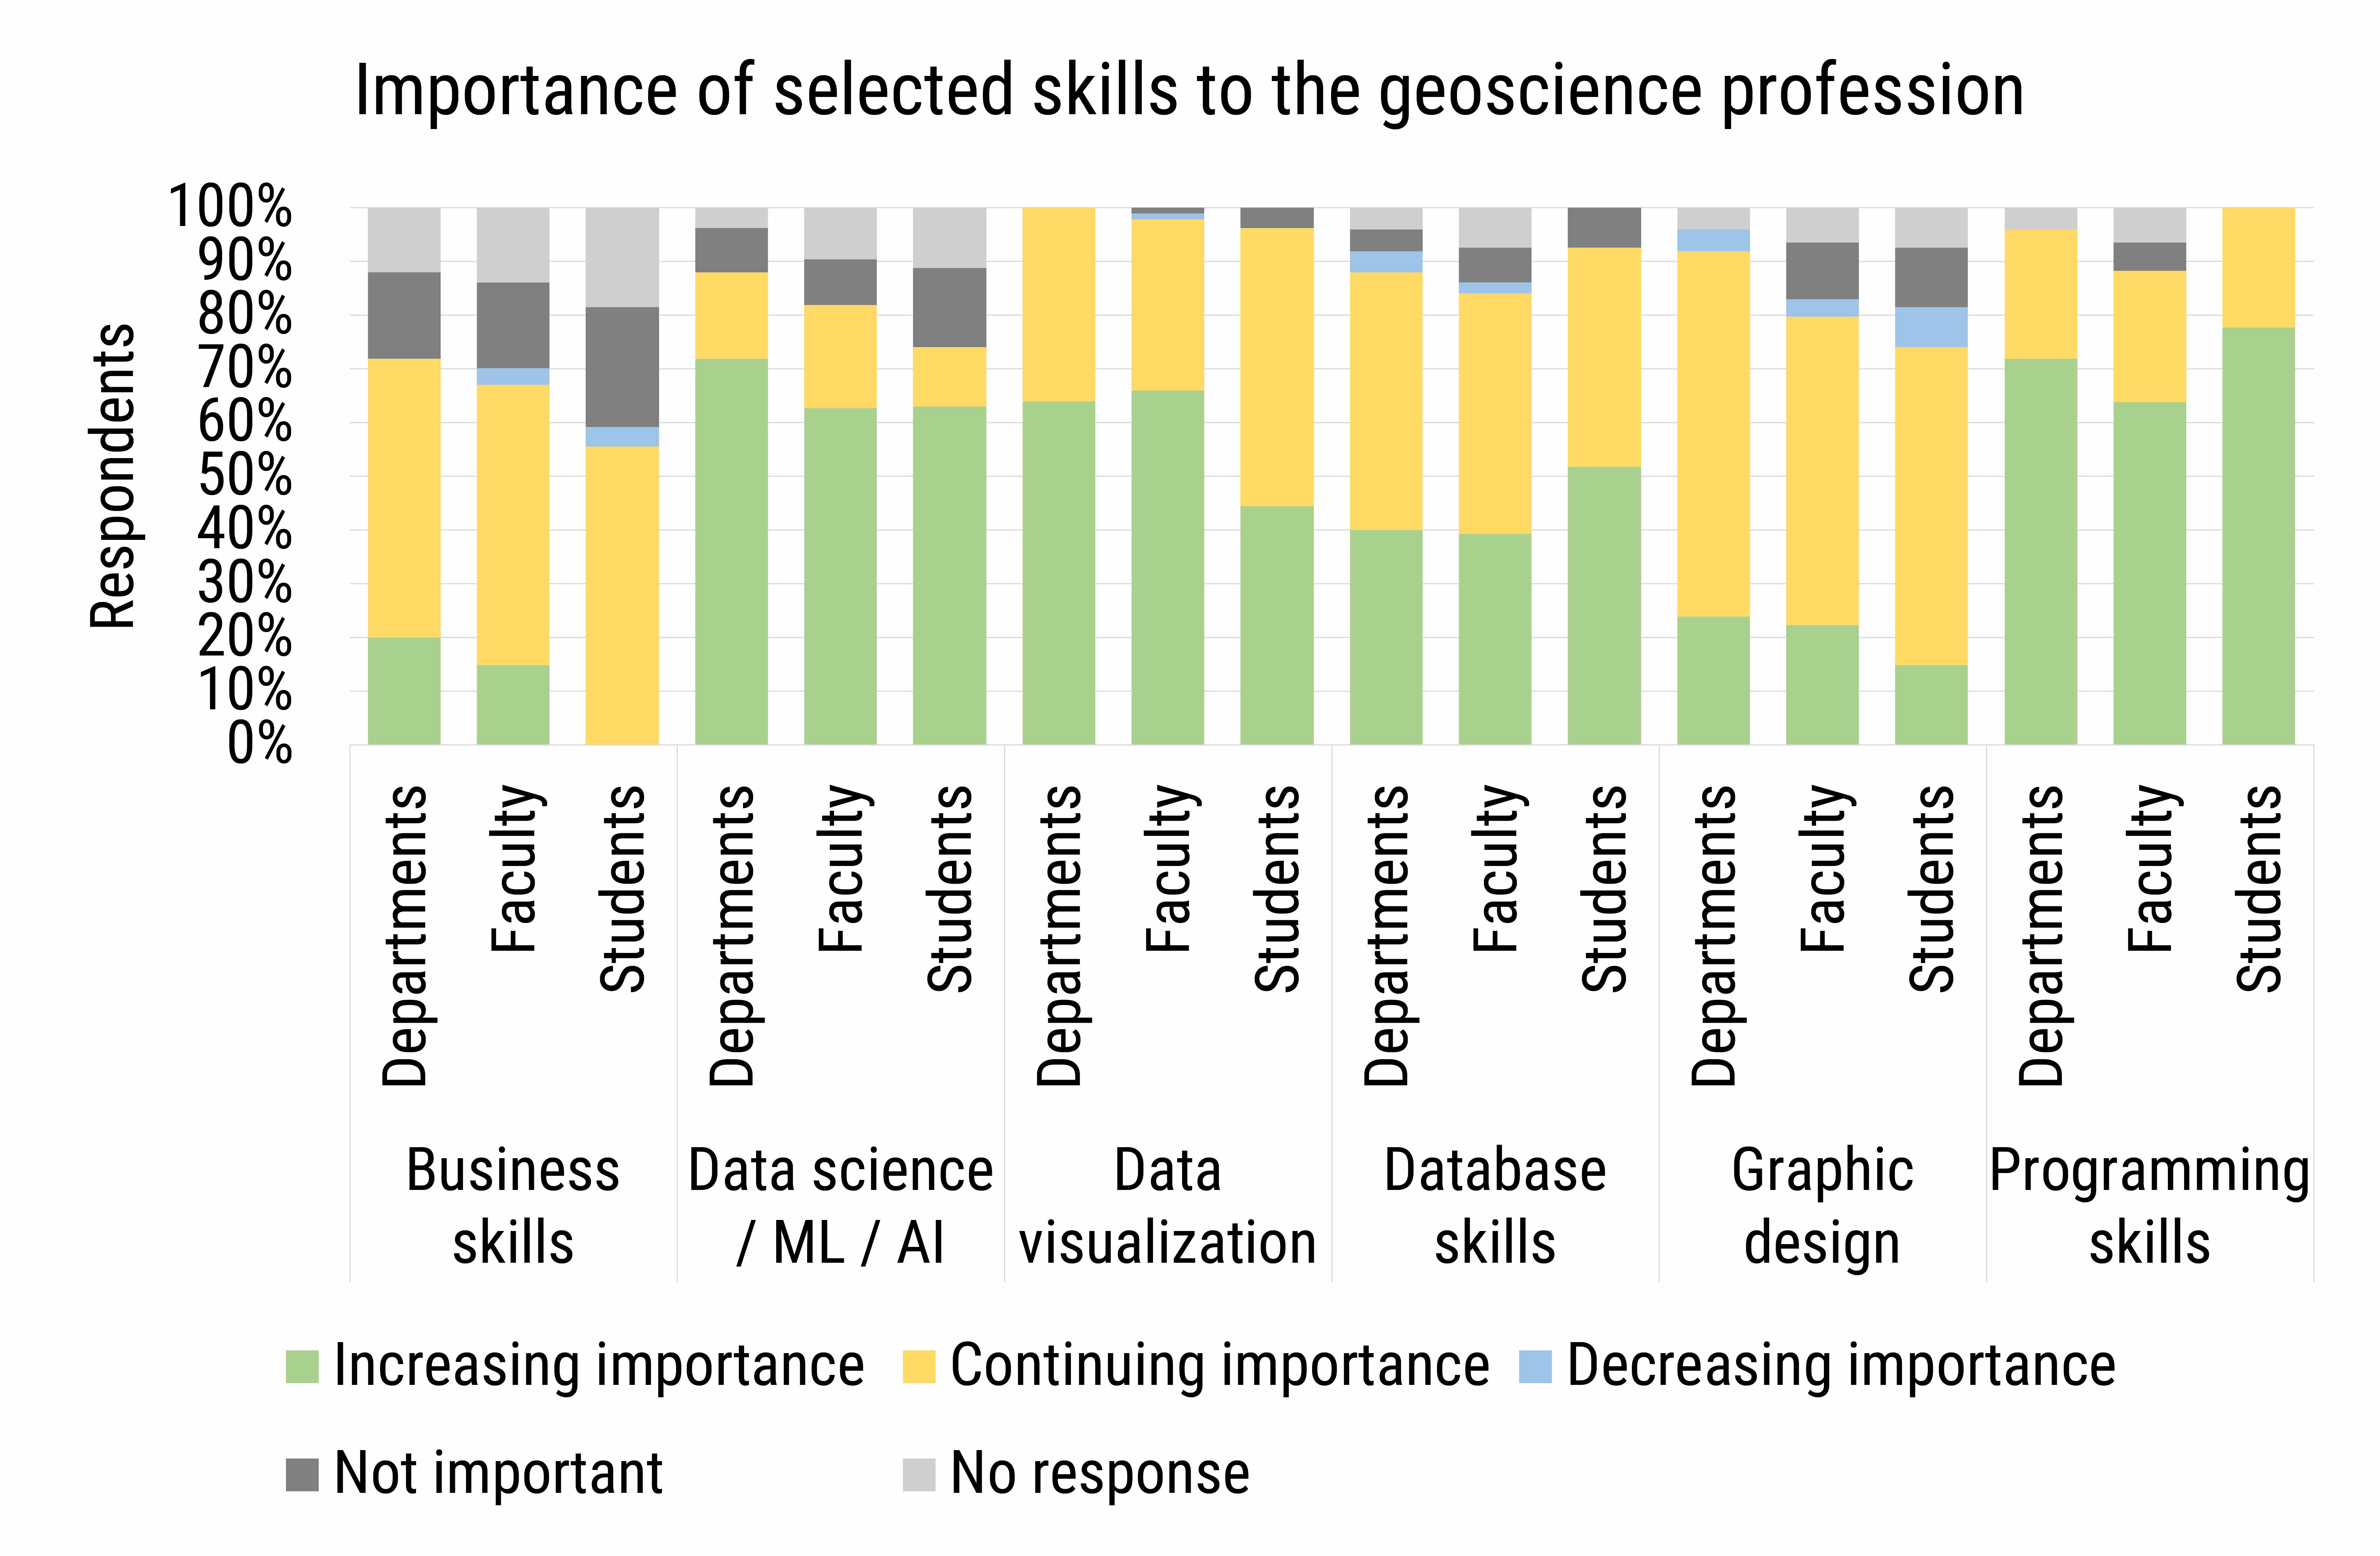 DB_2021-017 chart 02: Incorporation of skills in academic programs (Credit: AGI; data from AGI's Geoscience COVID-19 Survey)